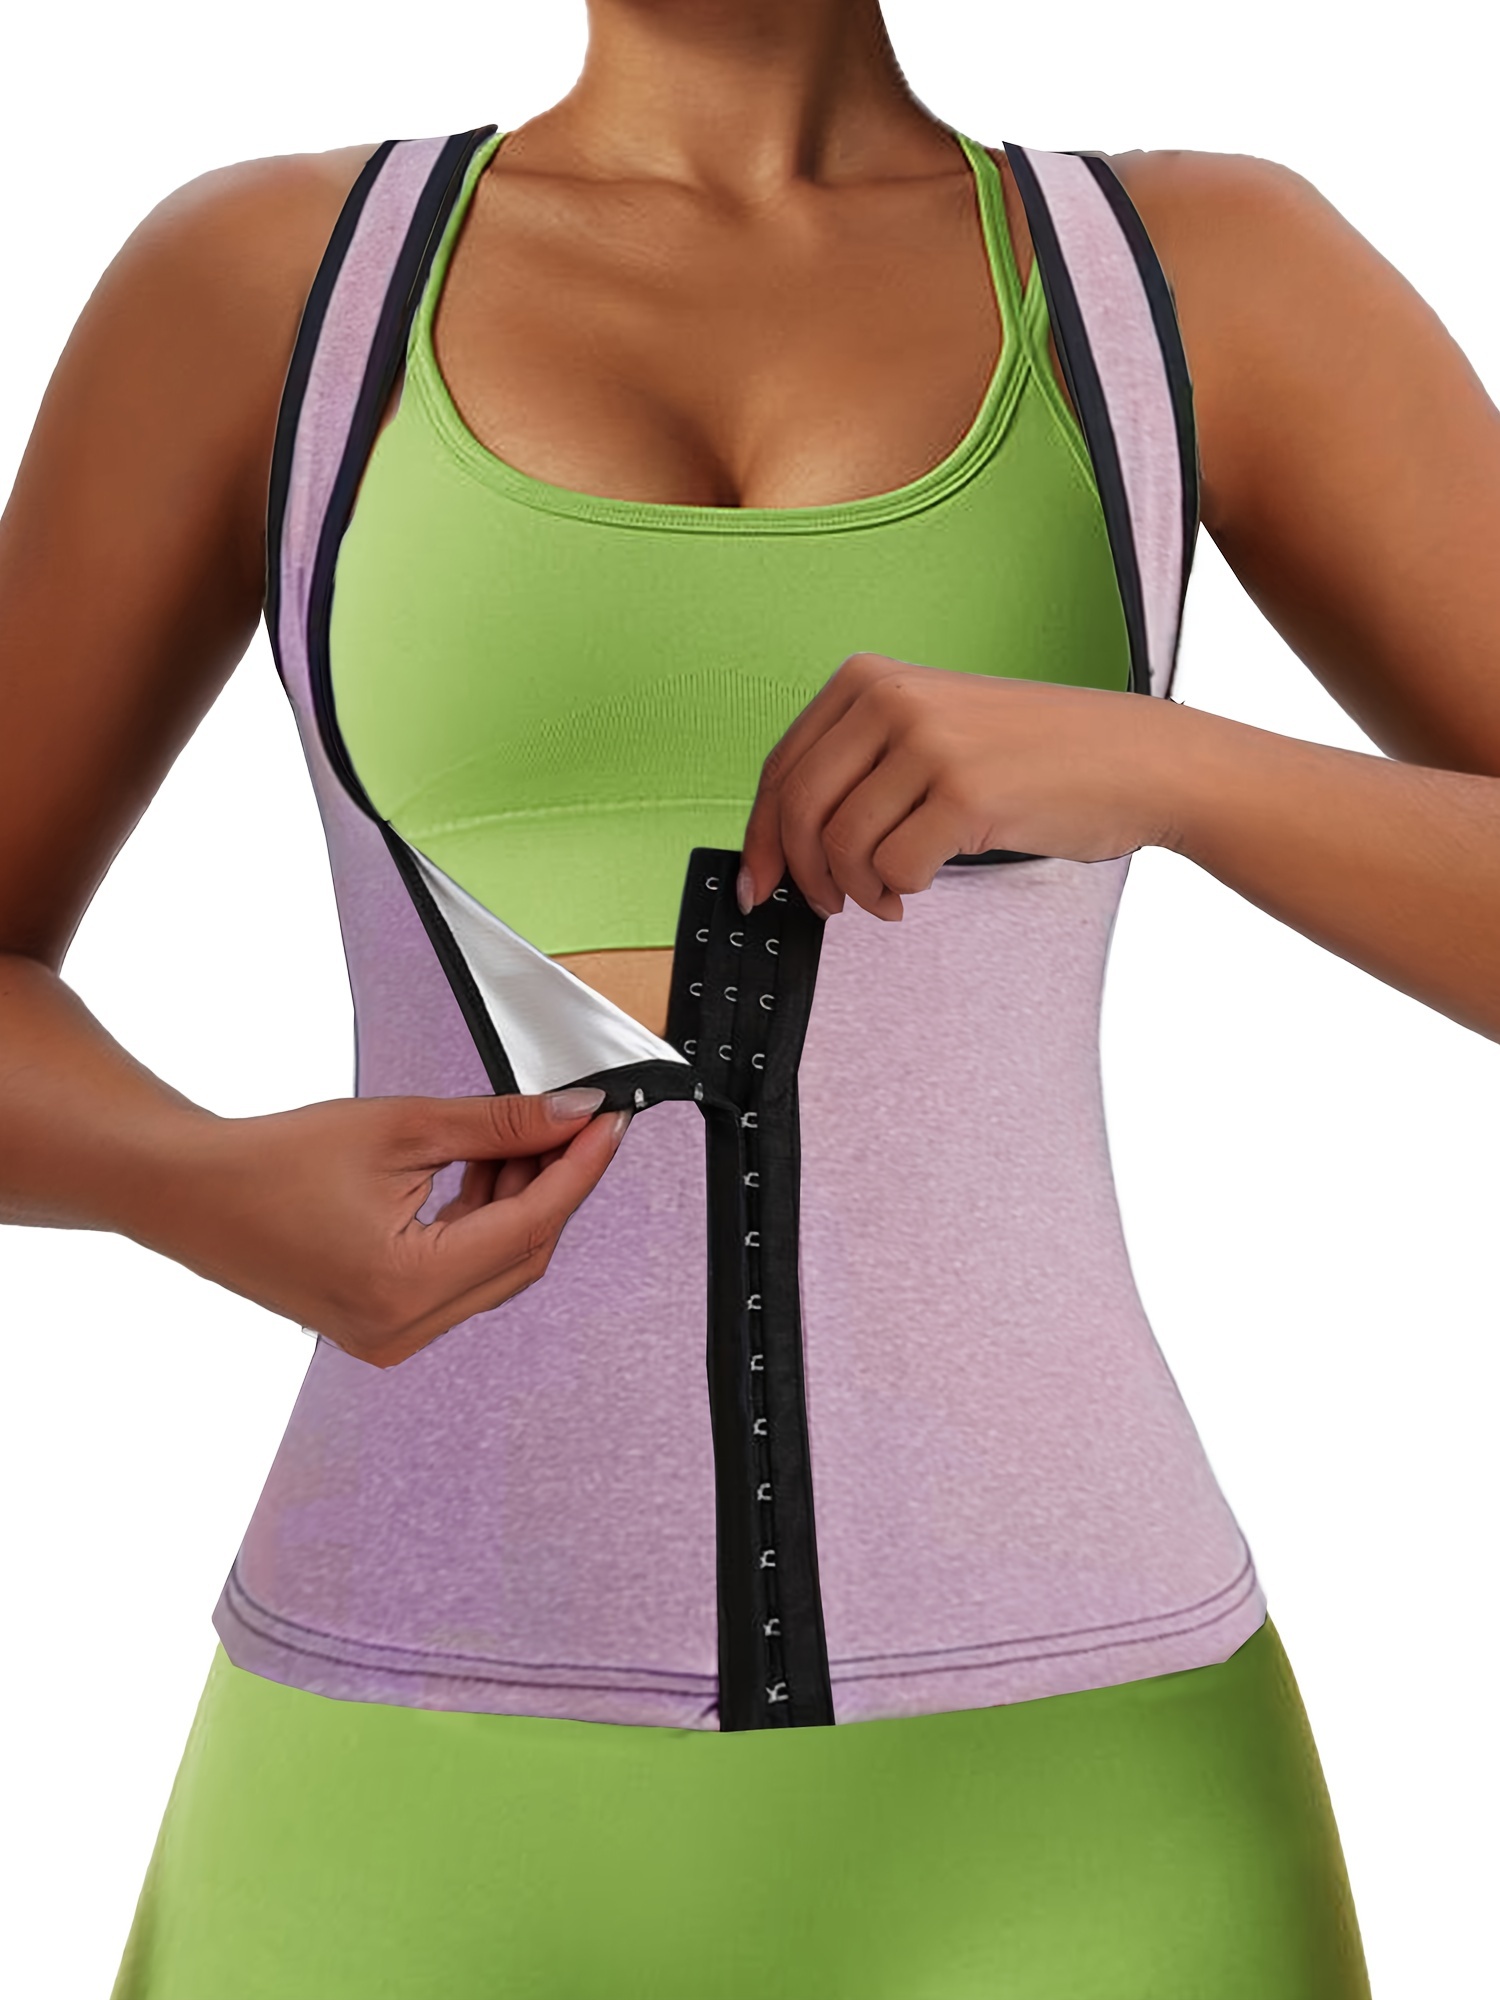 Buy Livwxk Waist Trainer for Women Lower Belly Fat-Sauna Suit